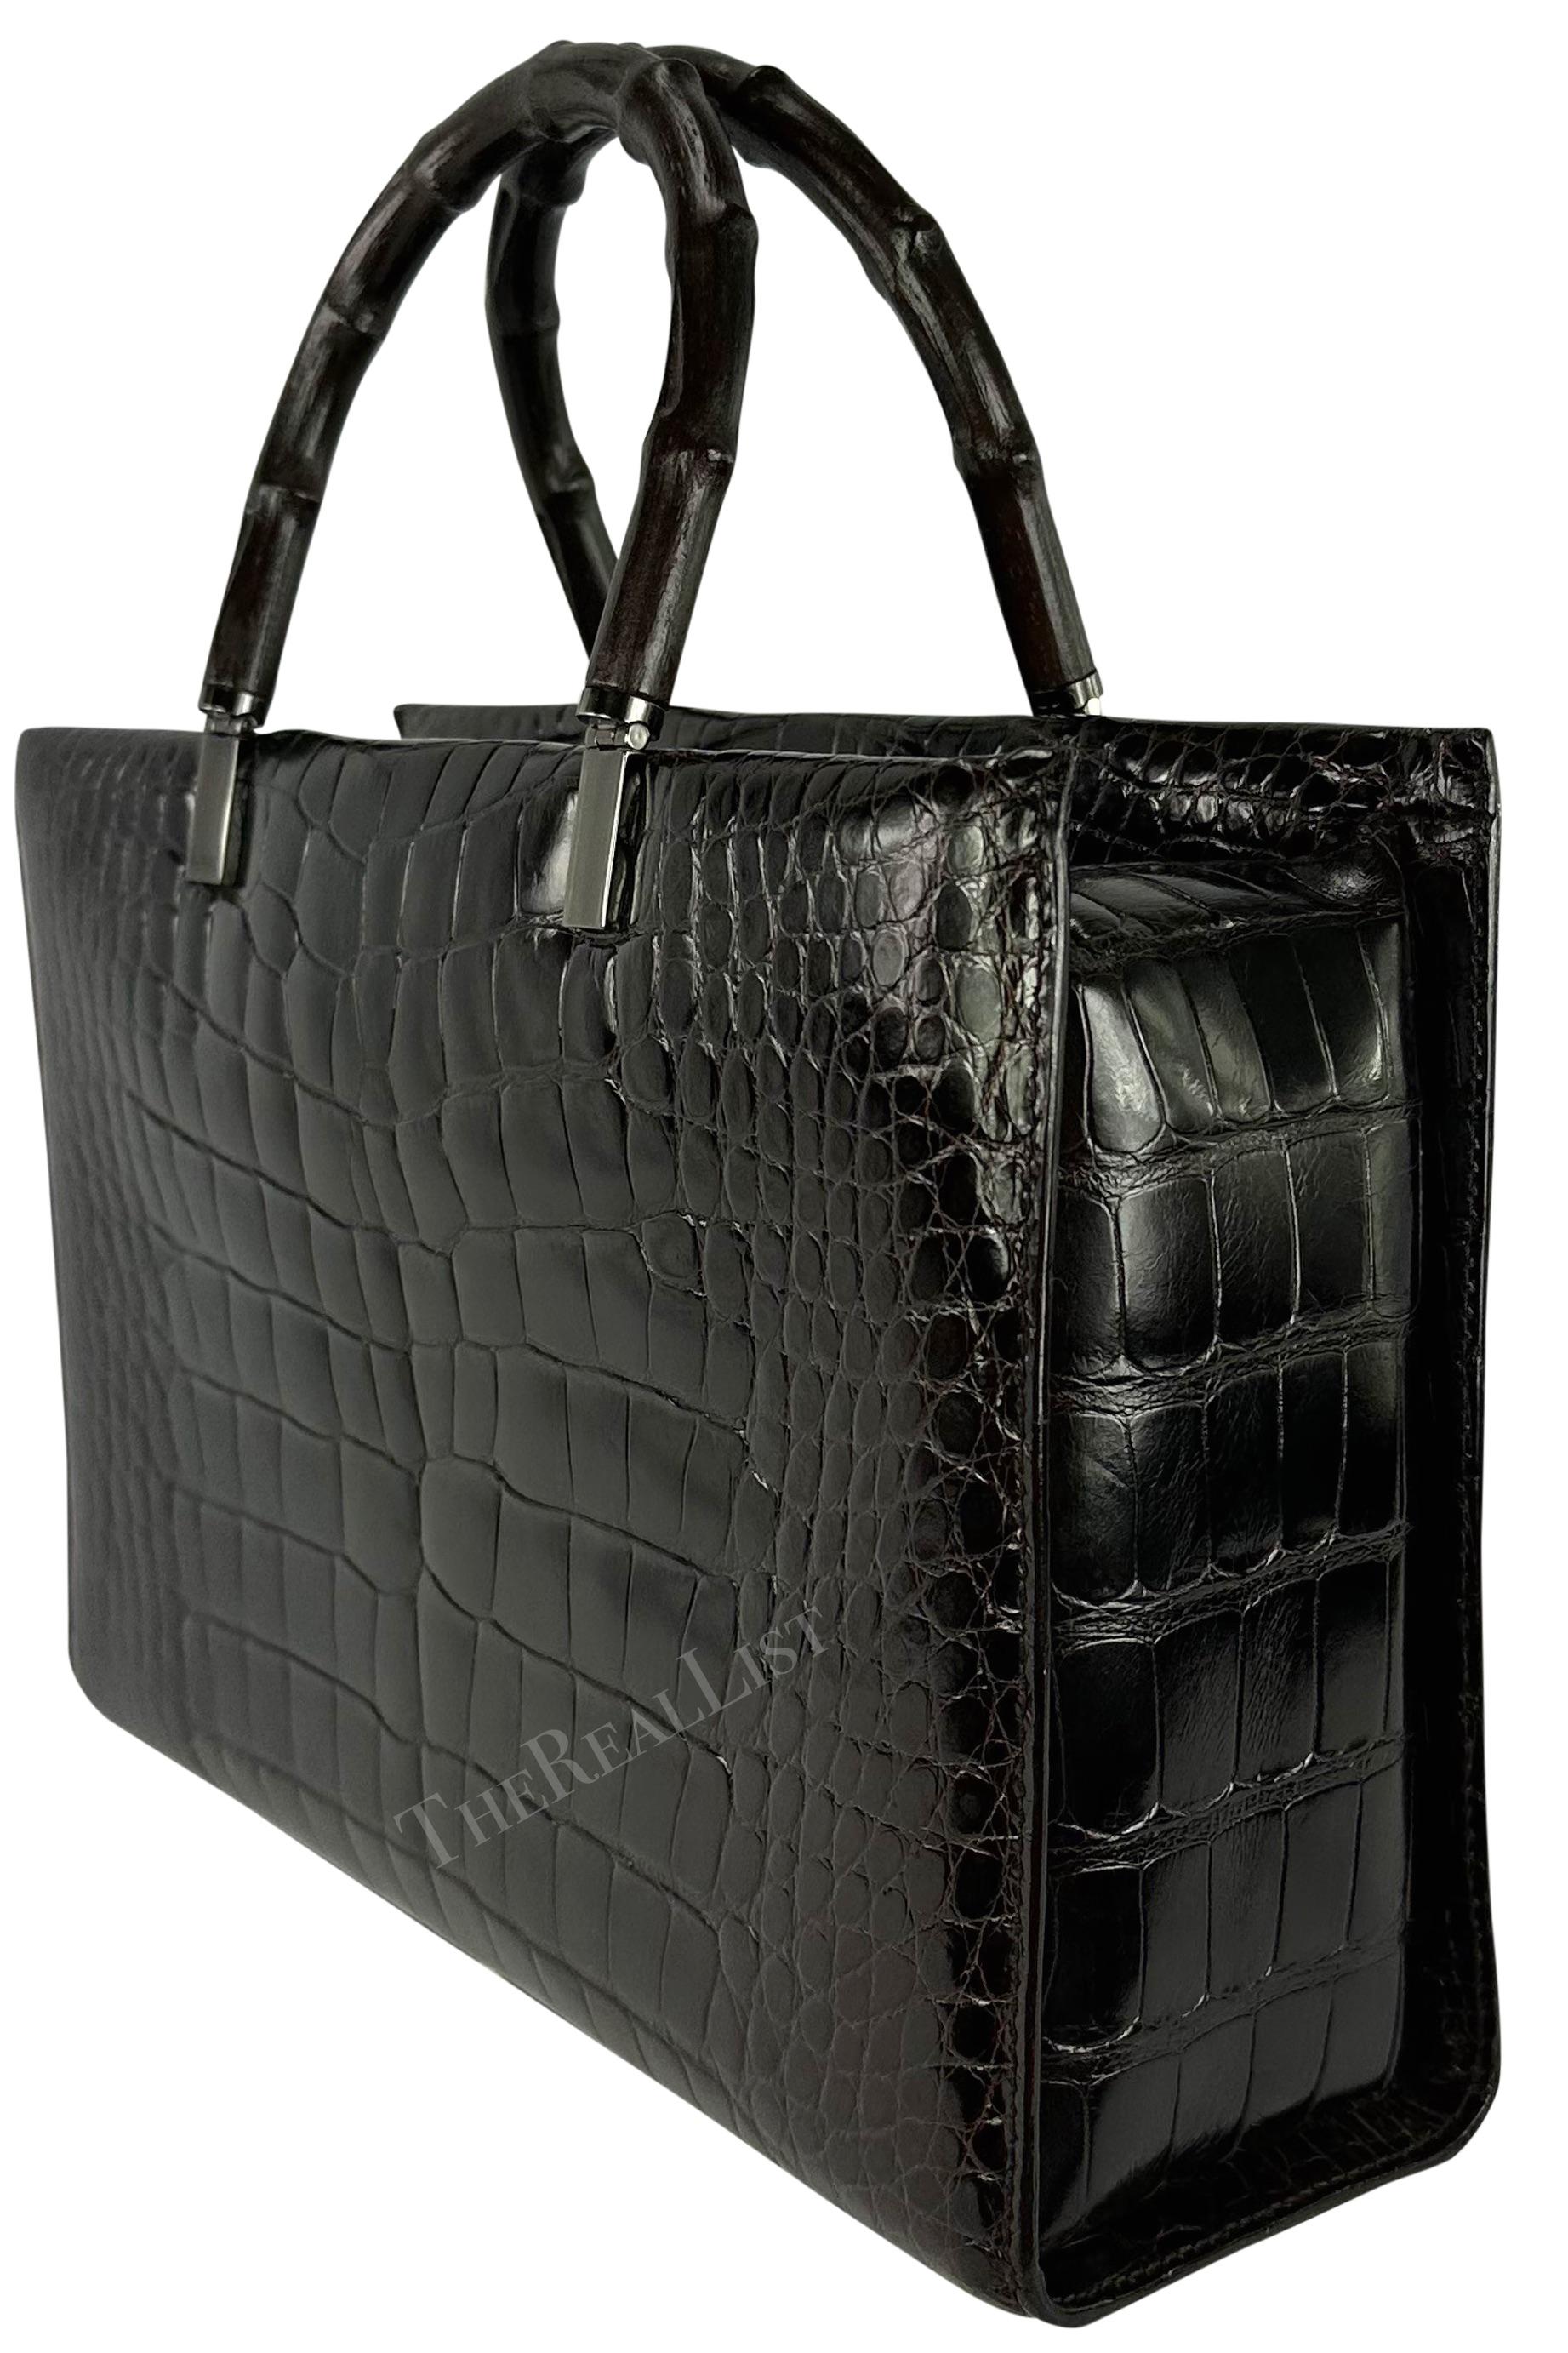 F/W 1998 Gucci by Tom Ford Ad Campaign Black Crocodile Bamboo Tote Bag  For Sale 3